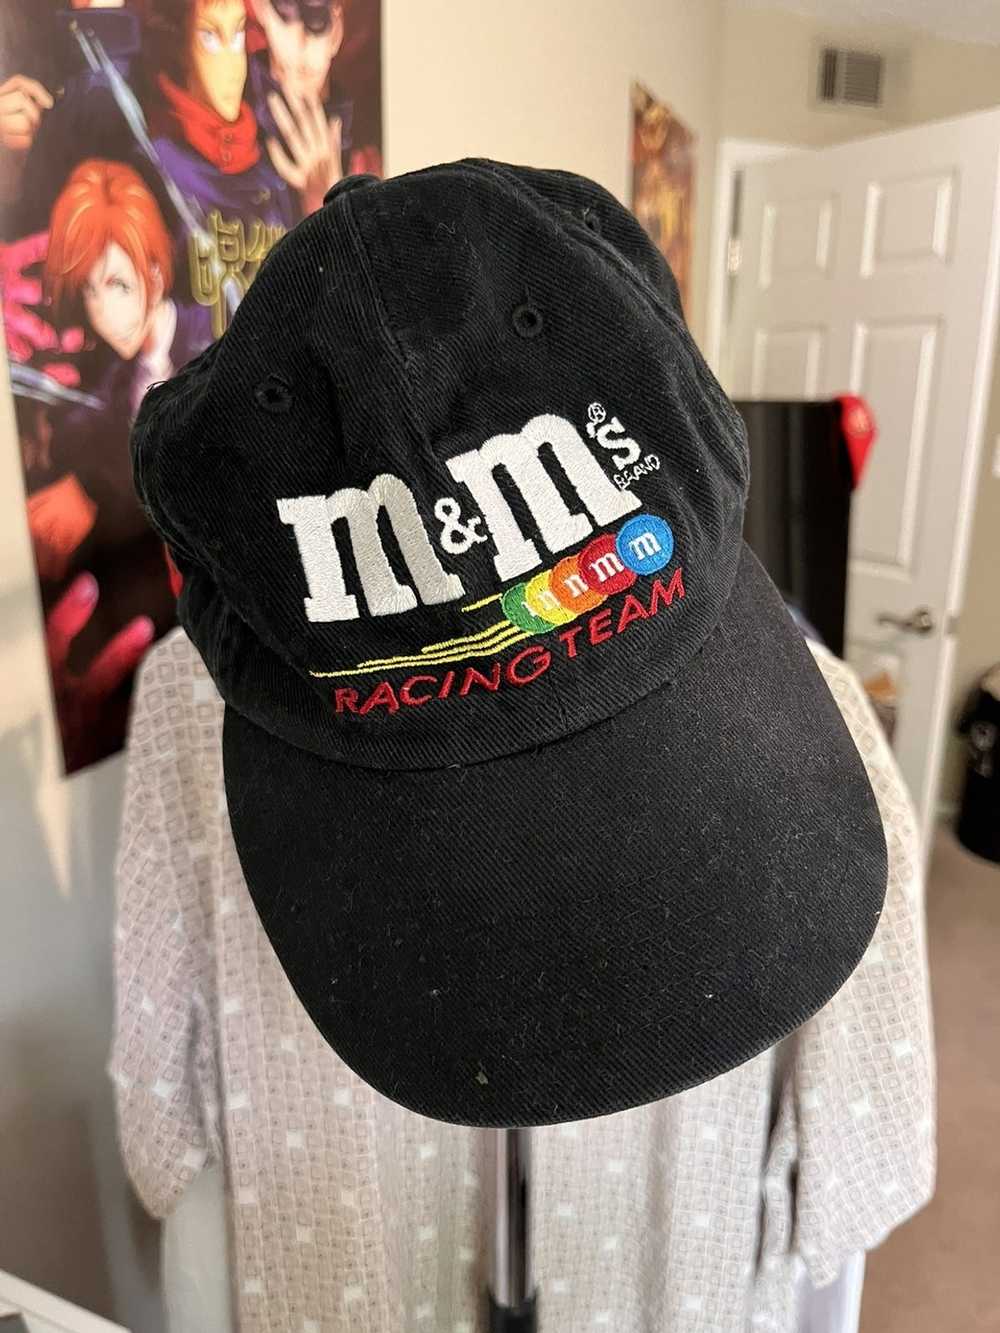 Mars Mars Racing Hat - image 1